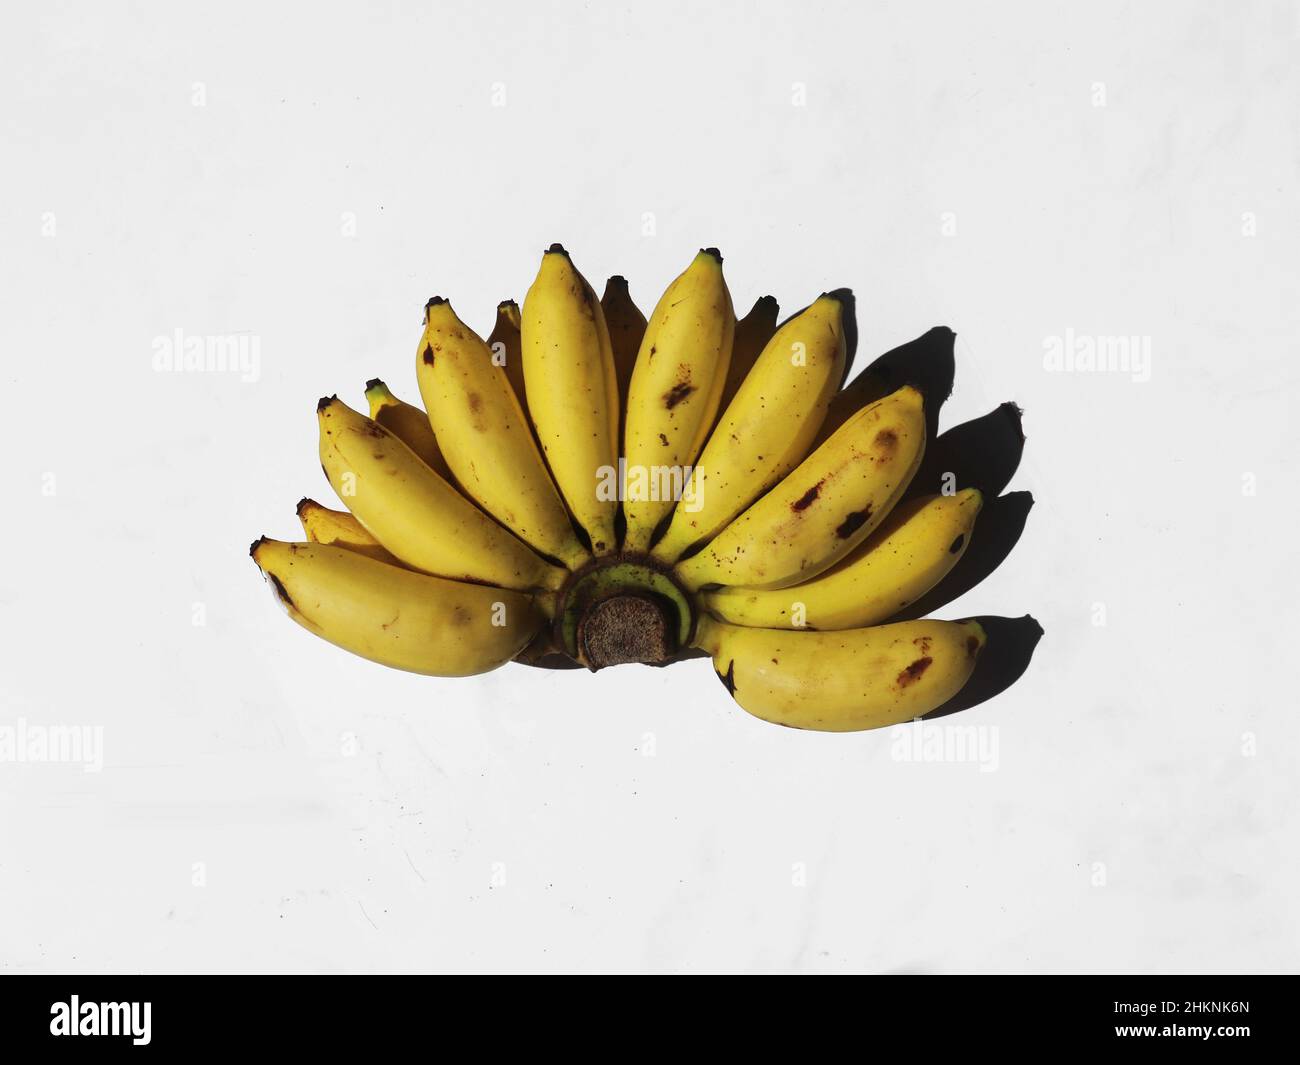 A hand of fresh banana on white background Stock Photo